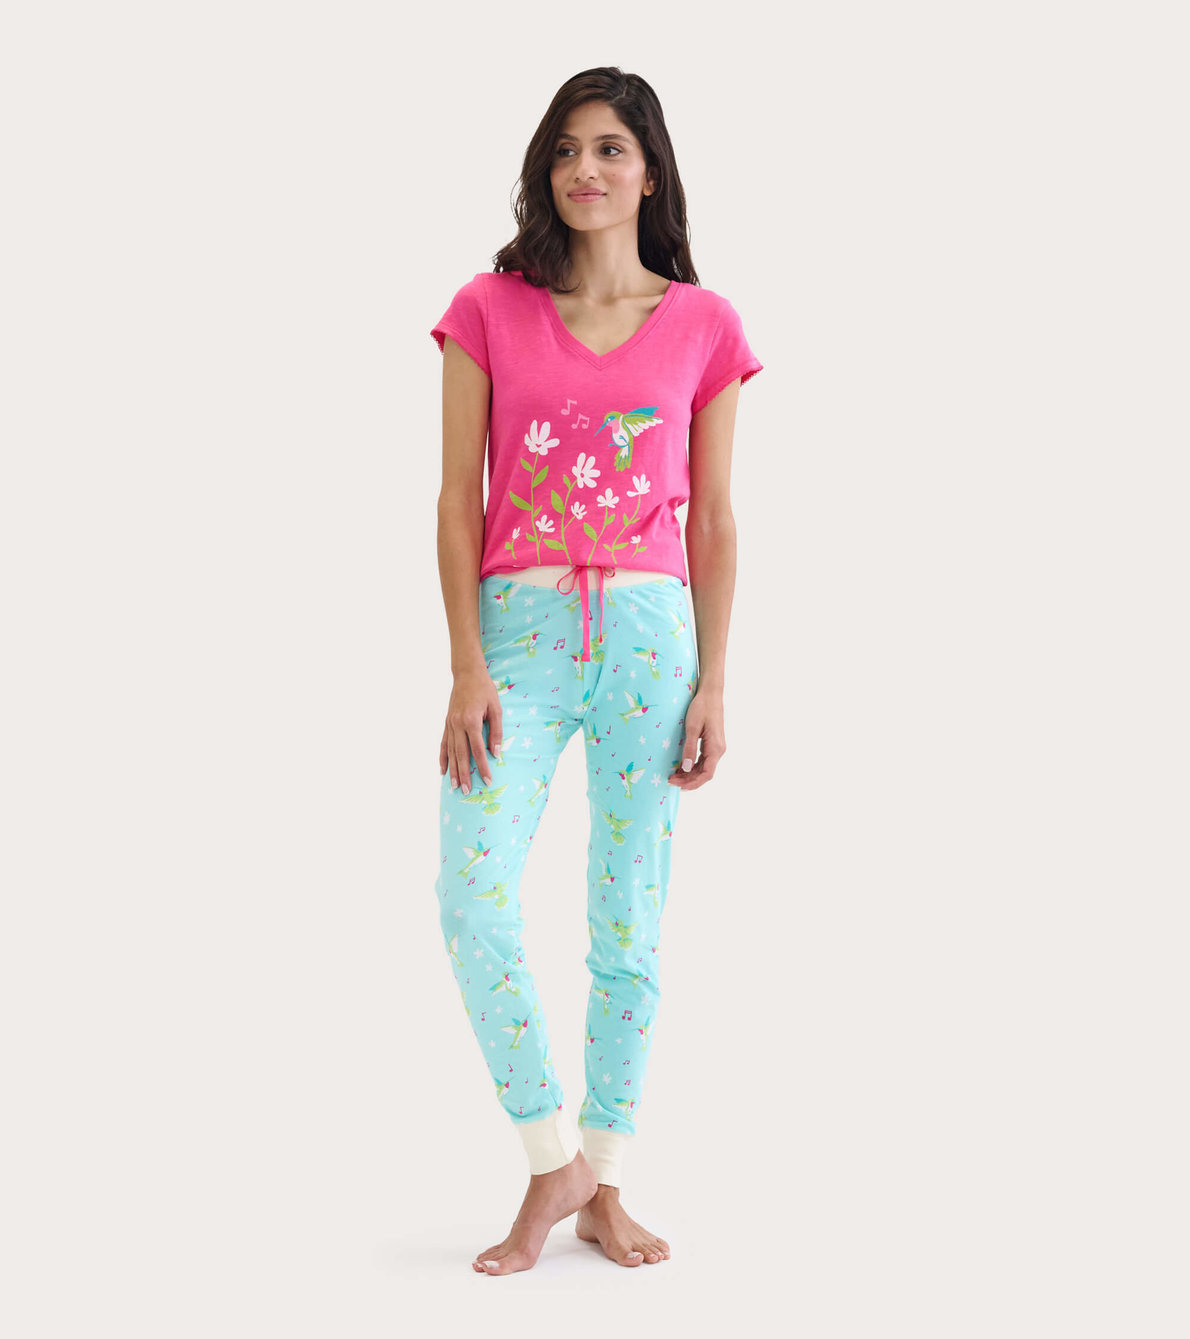 View larger image of Hummingbird Women's Tee and Leggings Pajama Separates